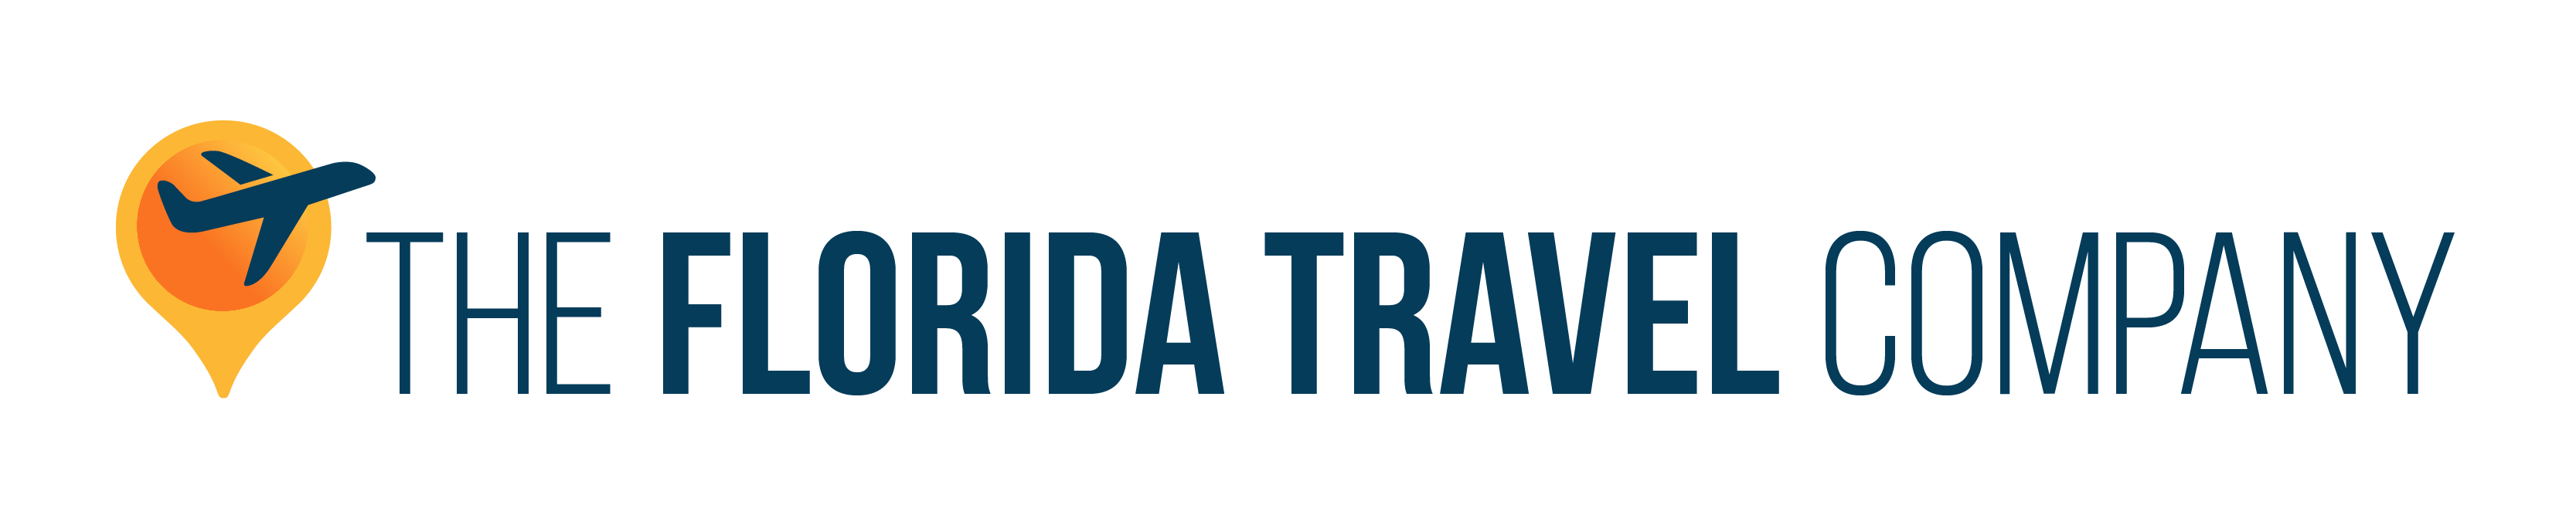 Florida Travel Company